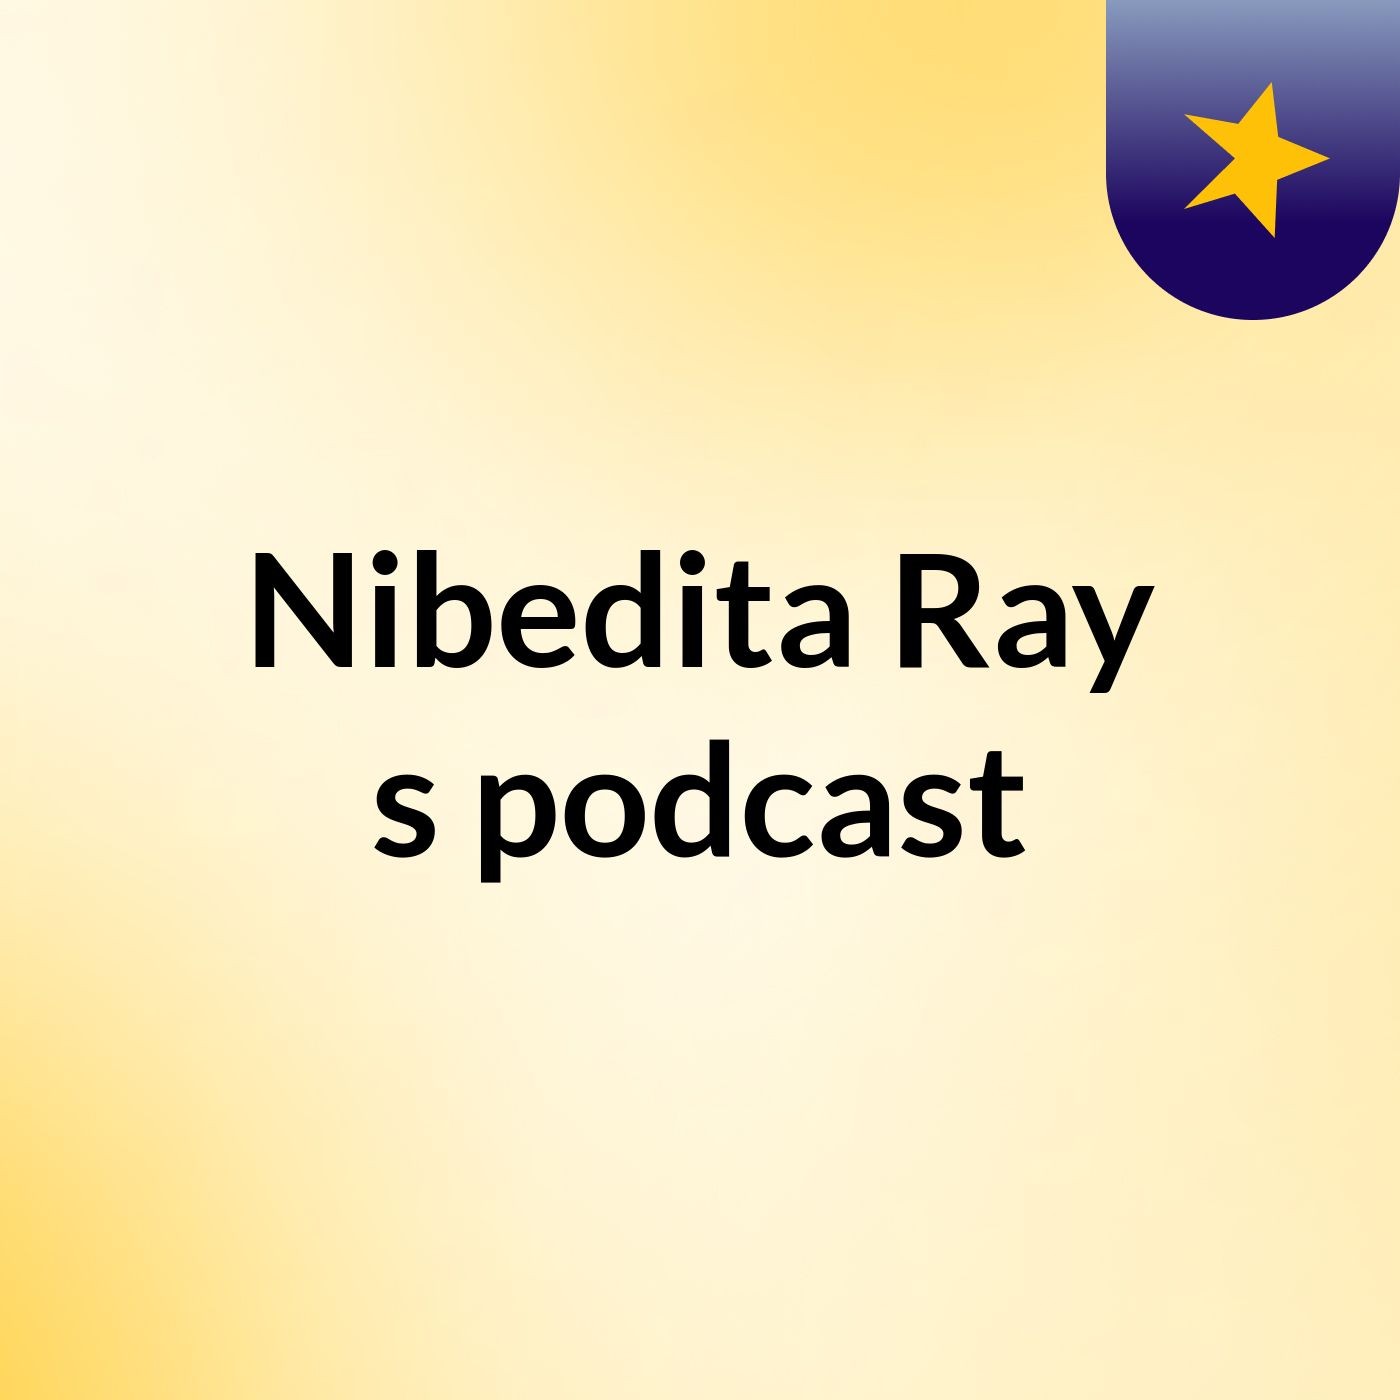 Nibedita Ray's podcast